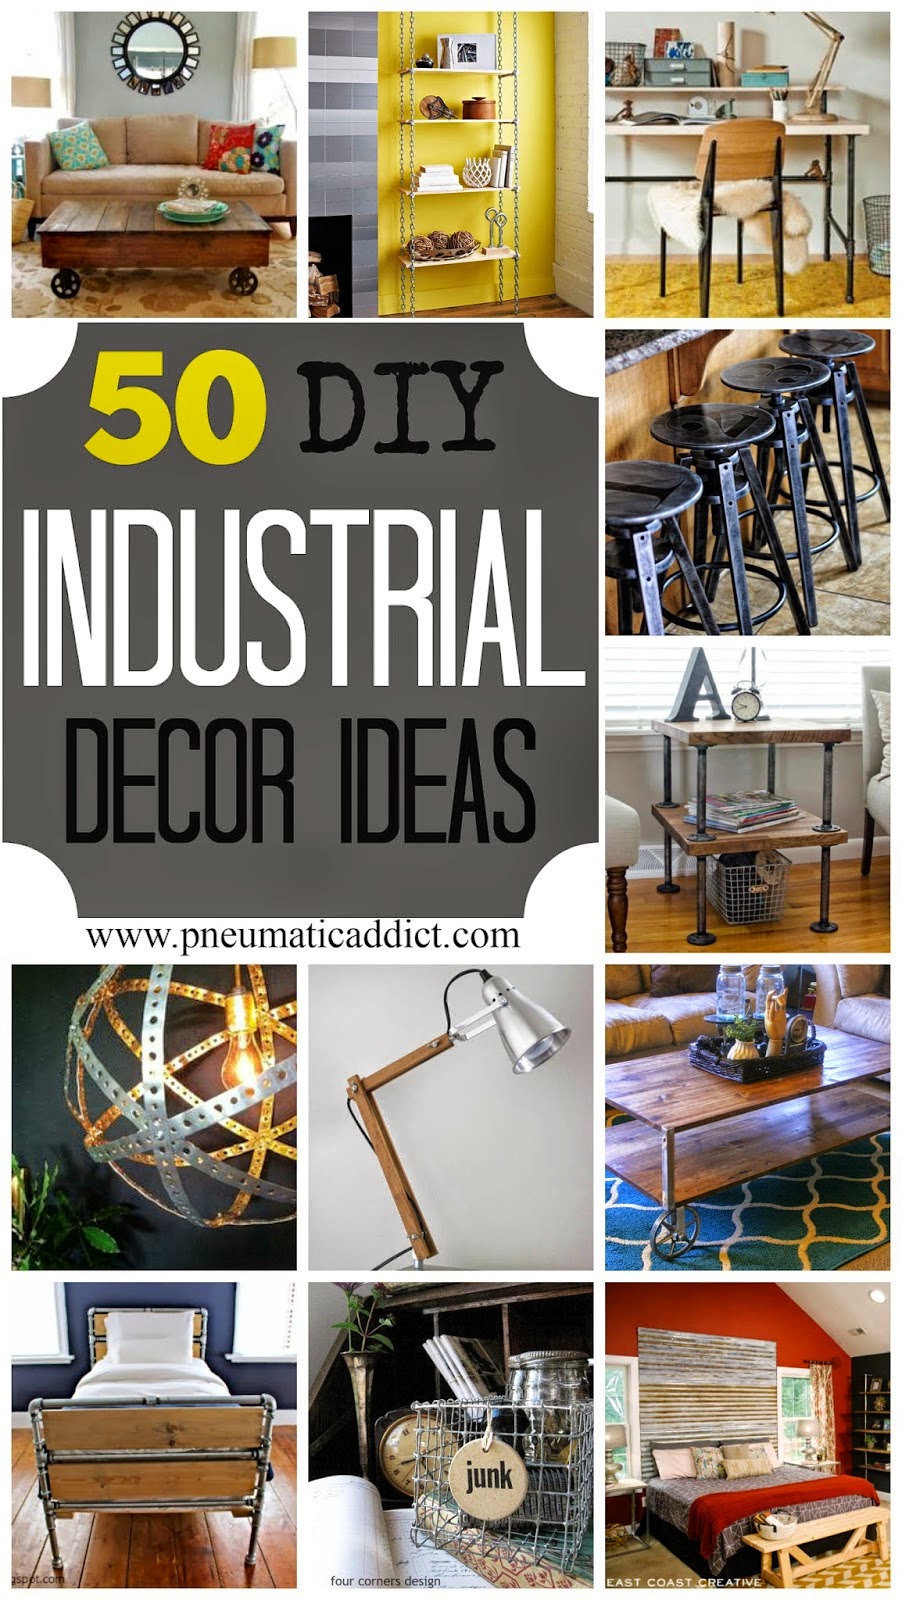 50 DIY Industrial Decor Ideas - DIY Craft Projects